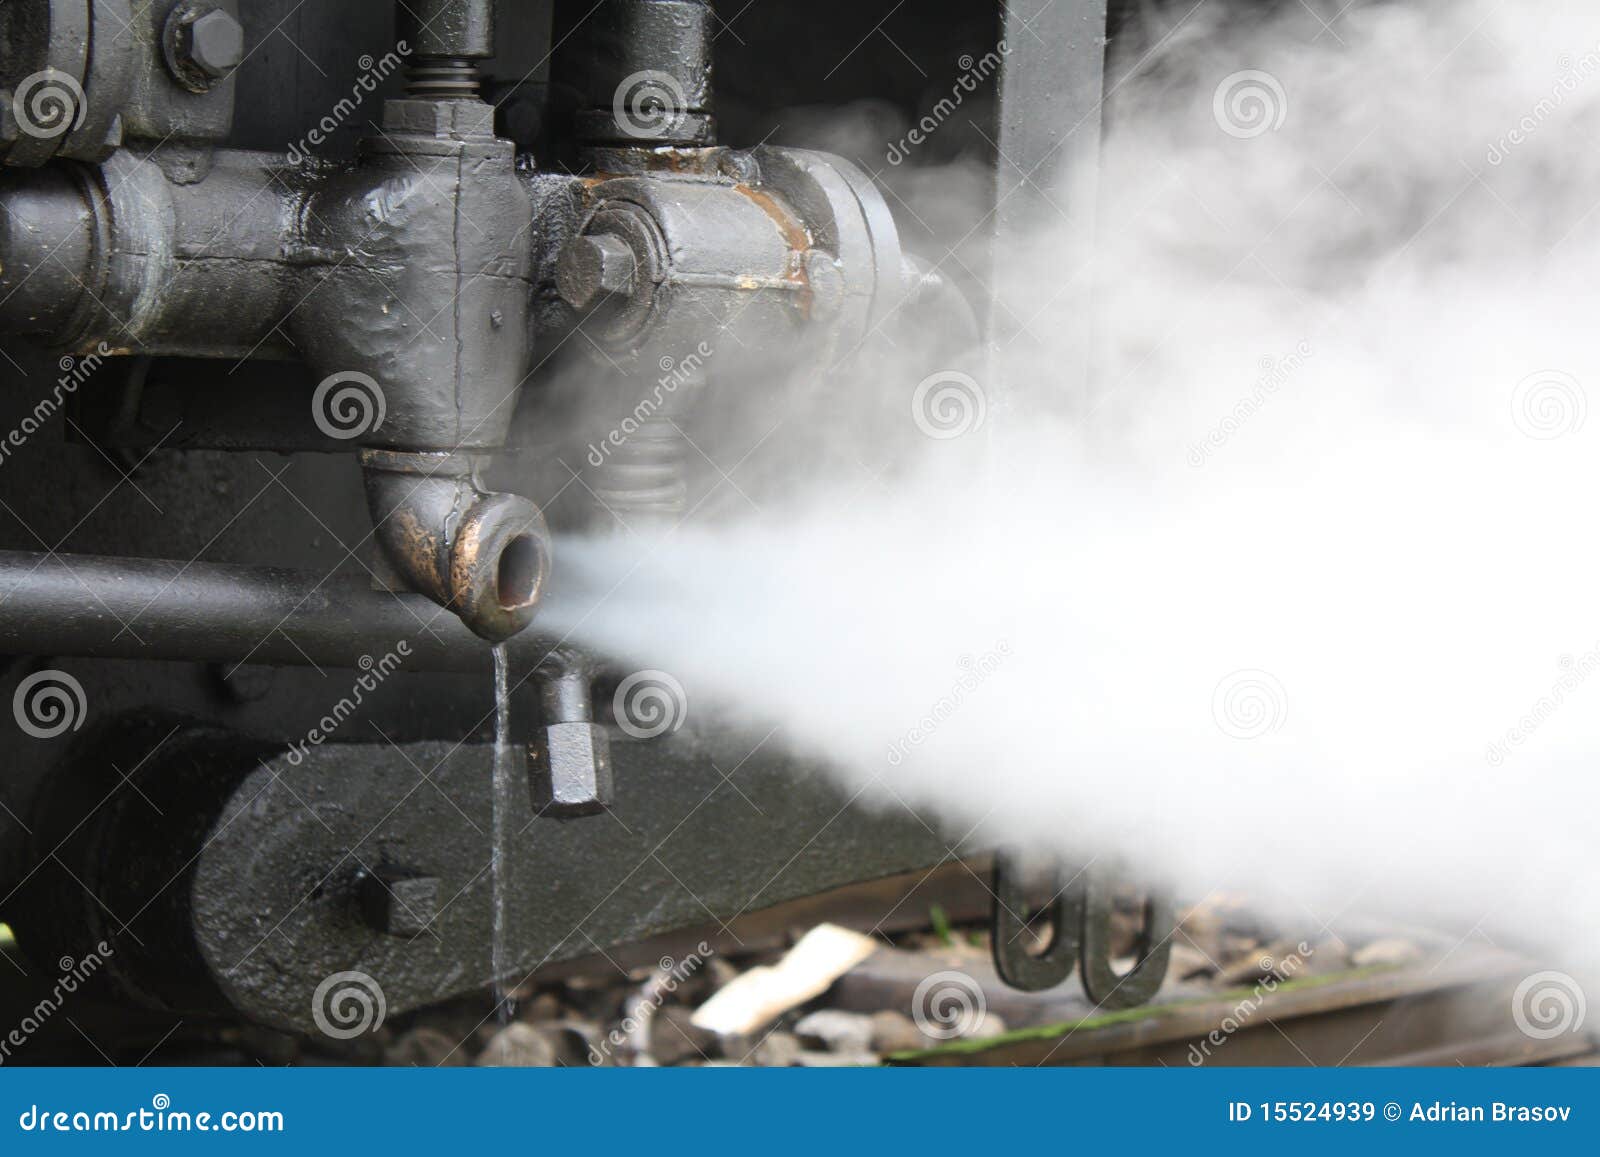 Steam pipe что это фото 76